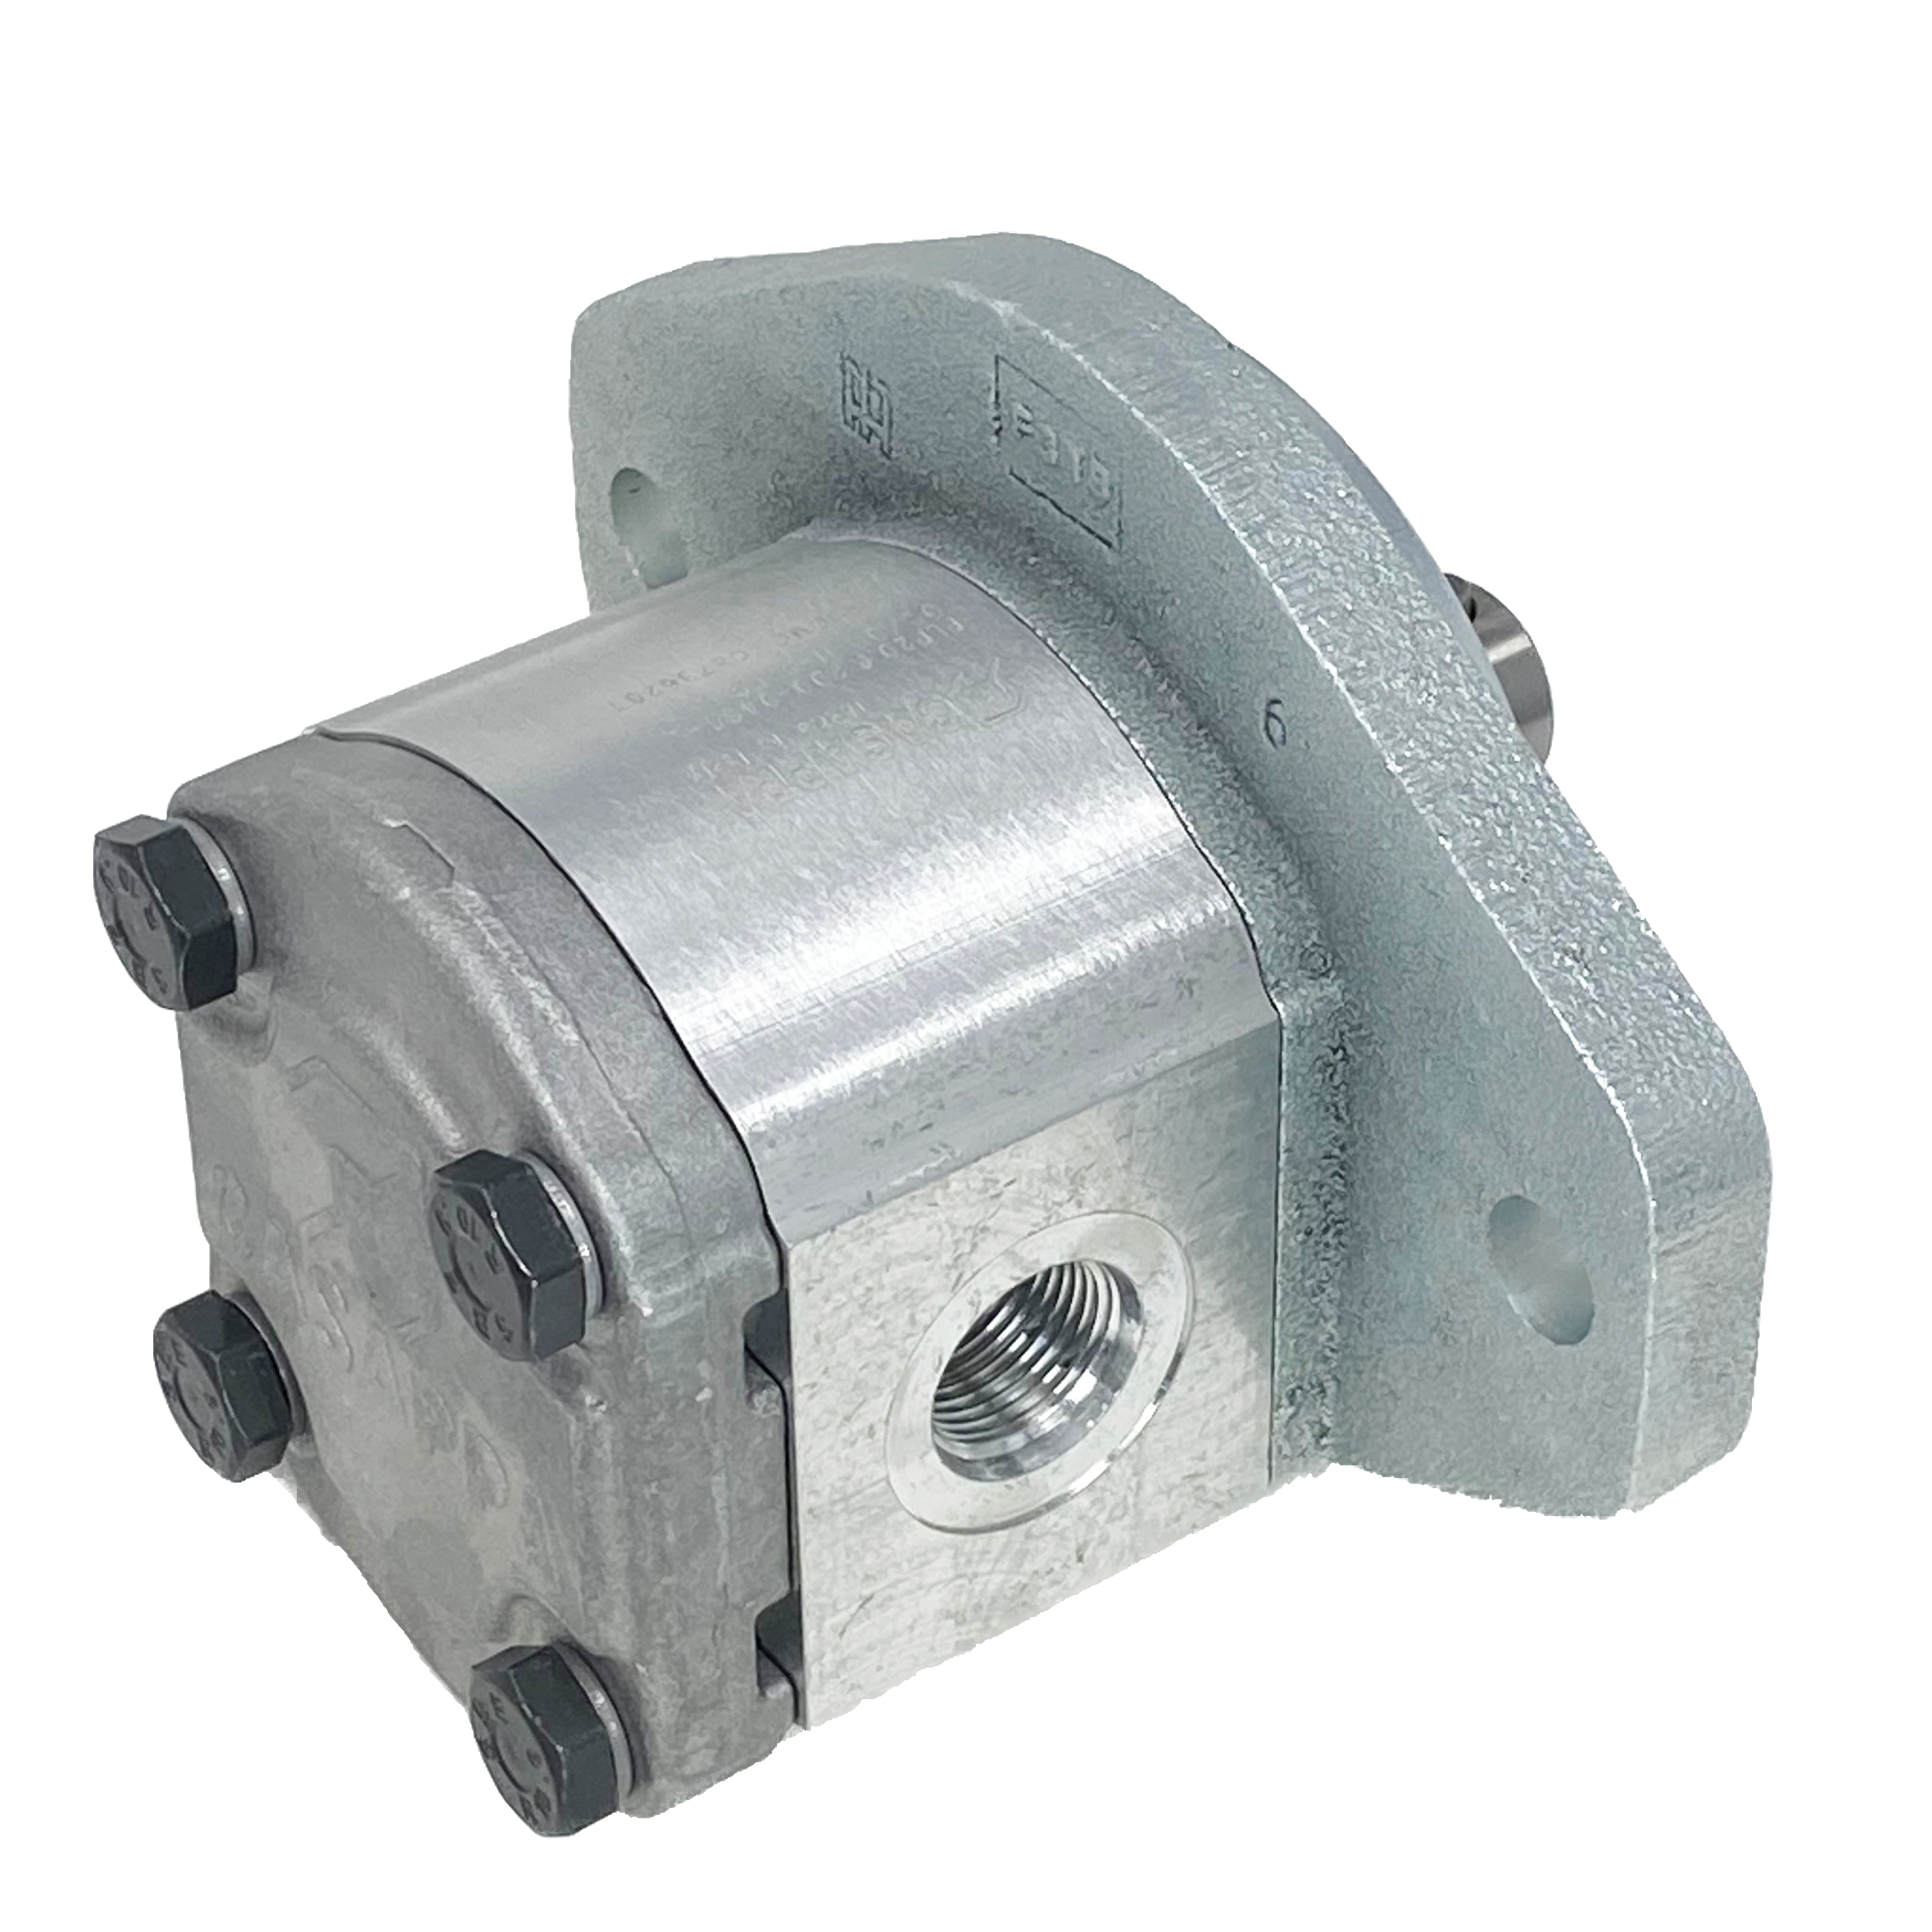 PLM20.8R0-32S5-LOC/OC-N-L : Casappa Polaris Gear Motor, 8.26cc, 3625psi, 3500RPM, Reversible, External Drain, 3/4" Bore x 1/4" Key Shaft, SAE B 2-Bolt Flange, 0.625 (5/8") #10 SAE In, 0.625 (5/8") #10 SAE Out, Aluminum Body, Cast Iron Flange